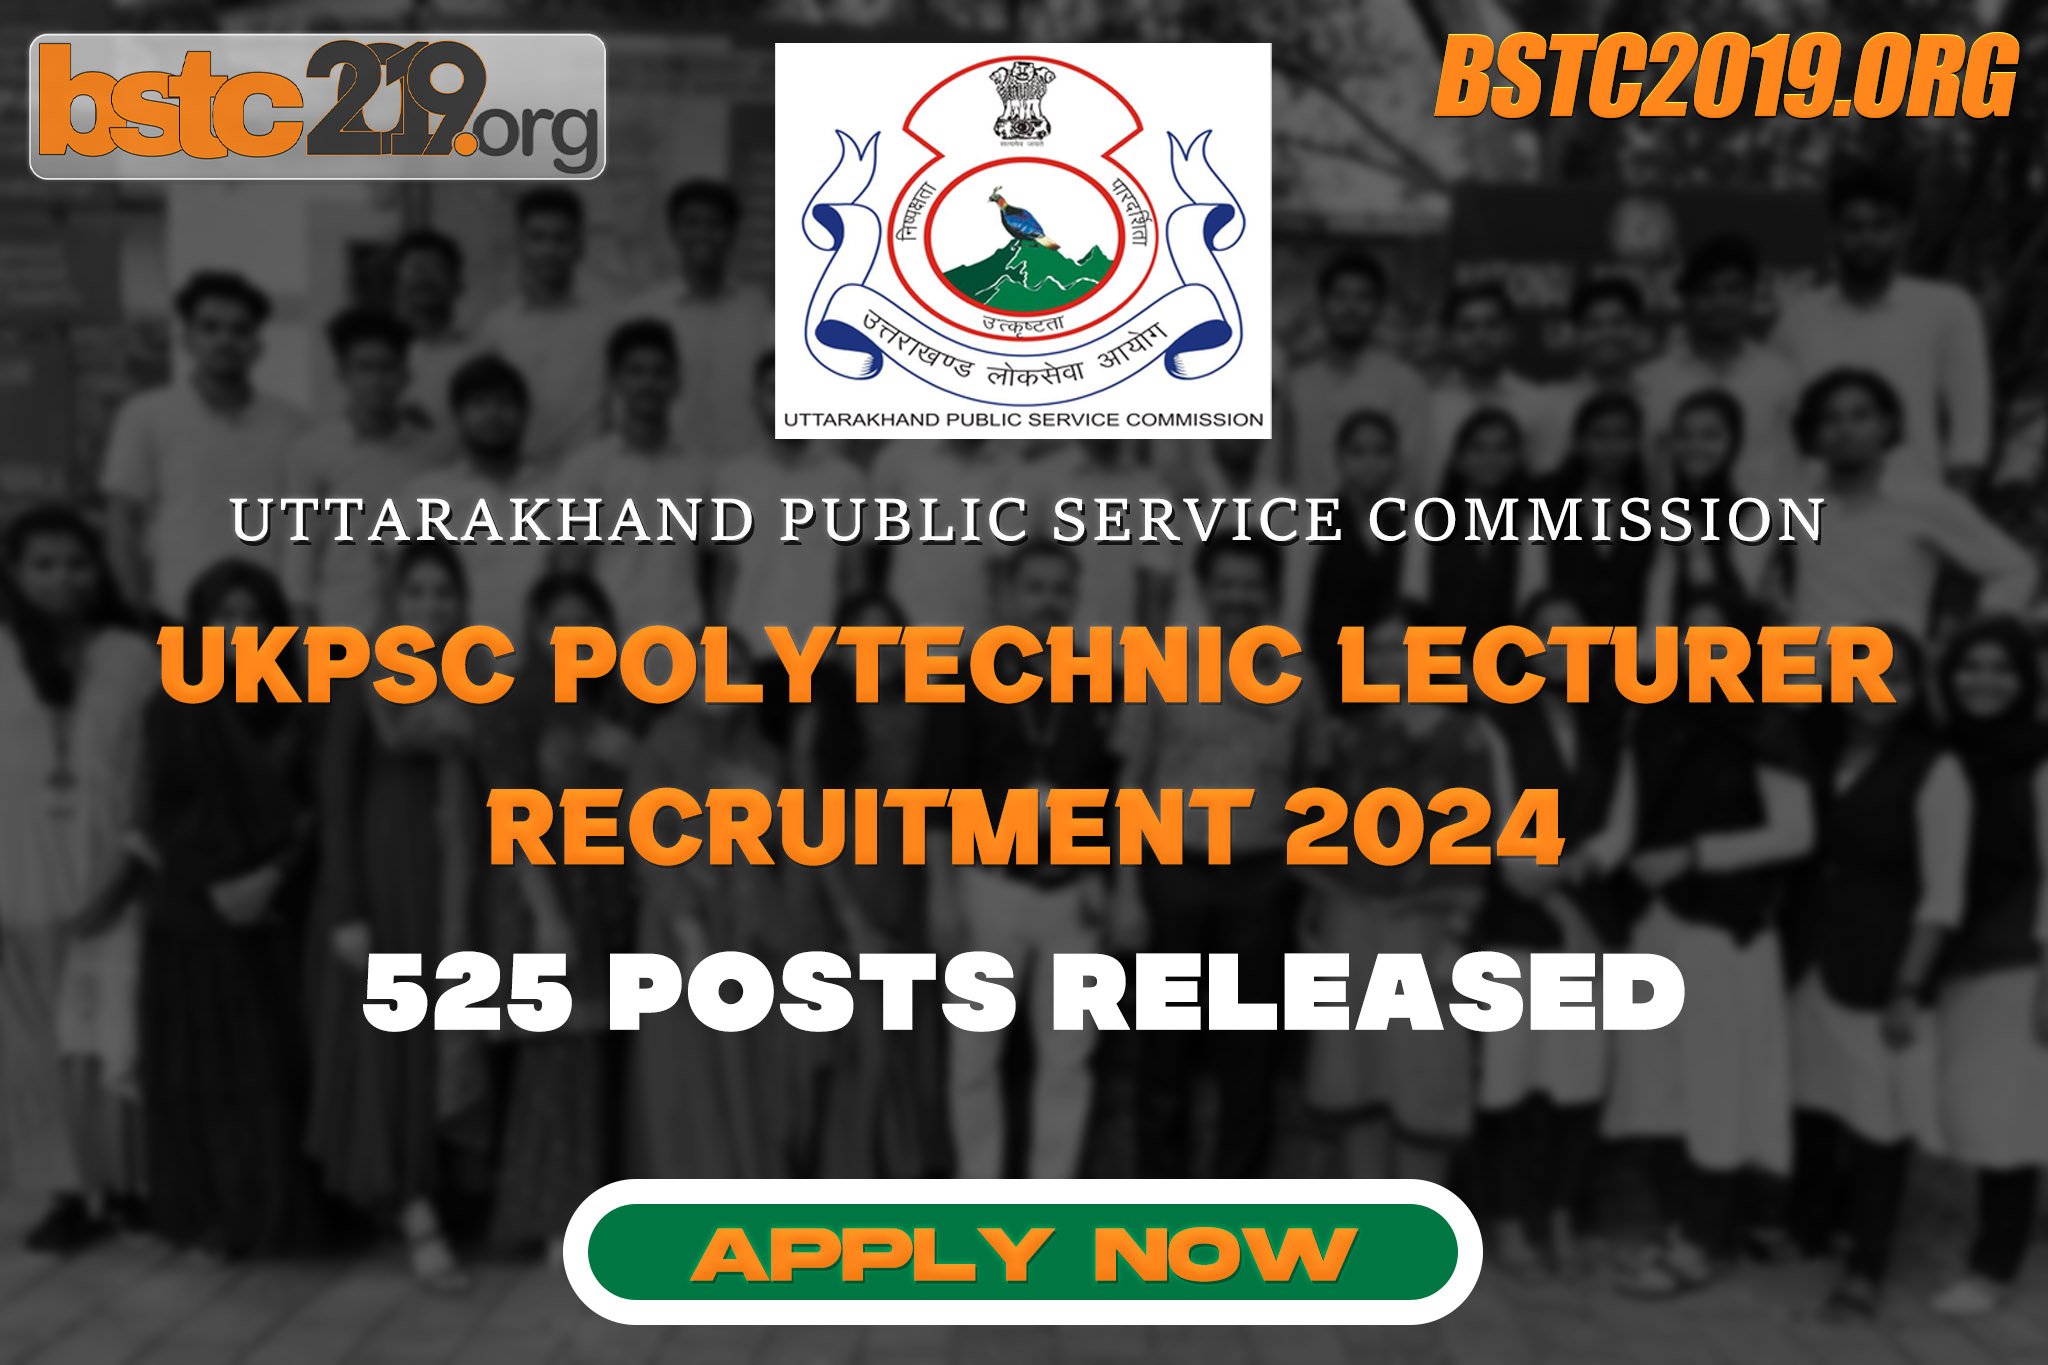 UKPSC Polytechnic Lecturer Recruitment